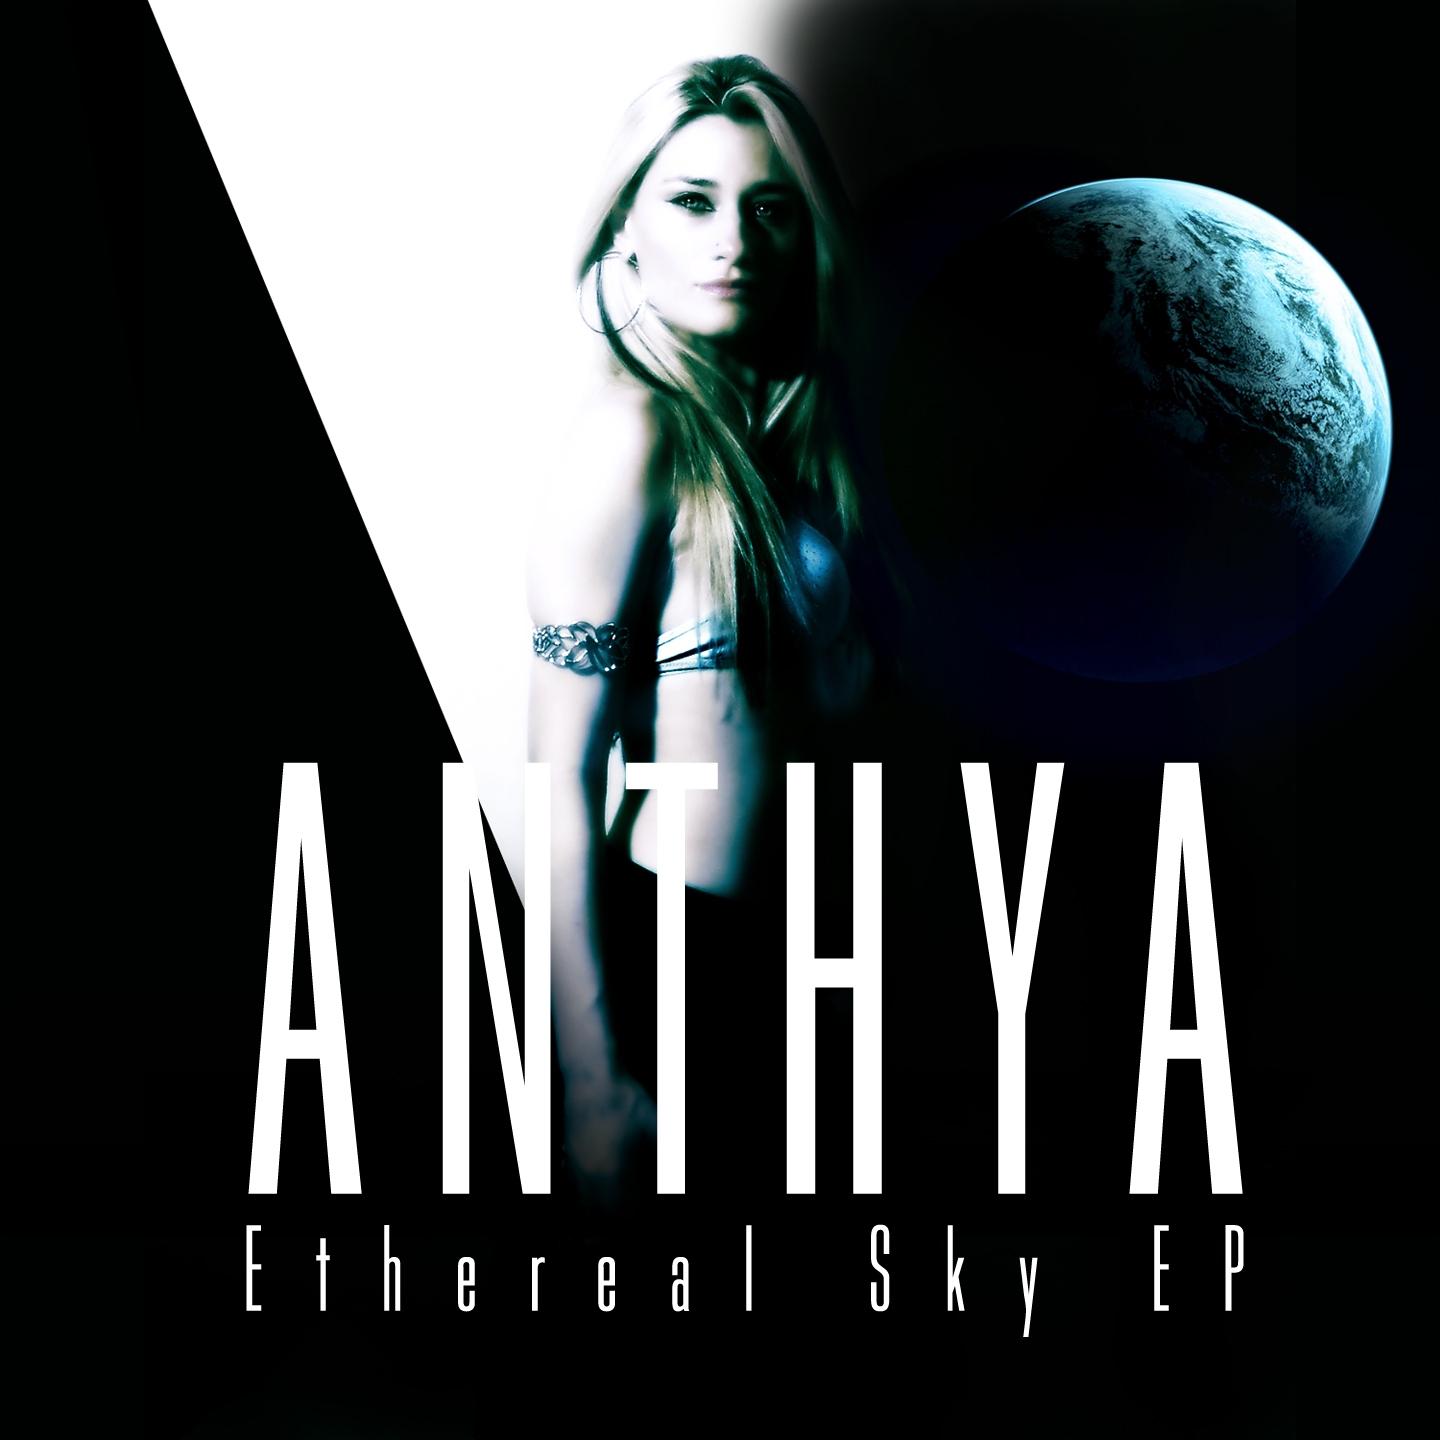 Ethereal Sky EP